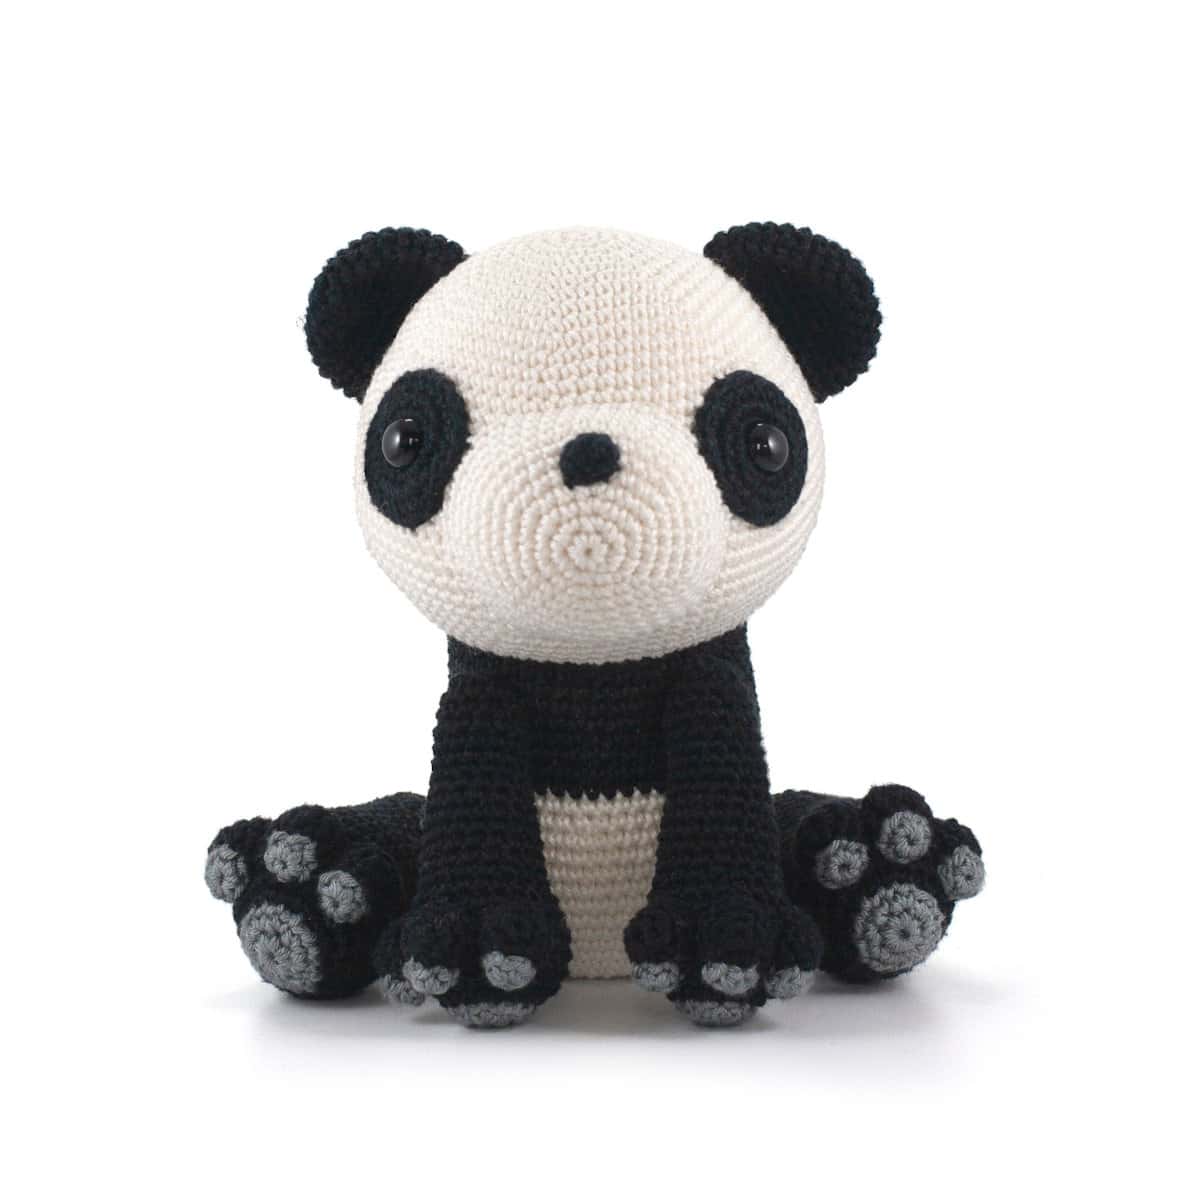 Crochet panda bear toy.